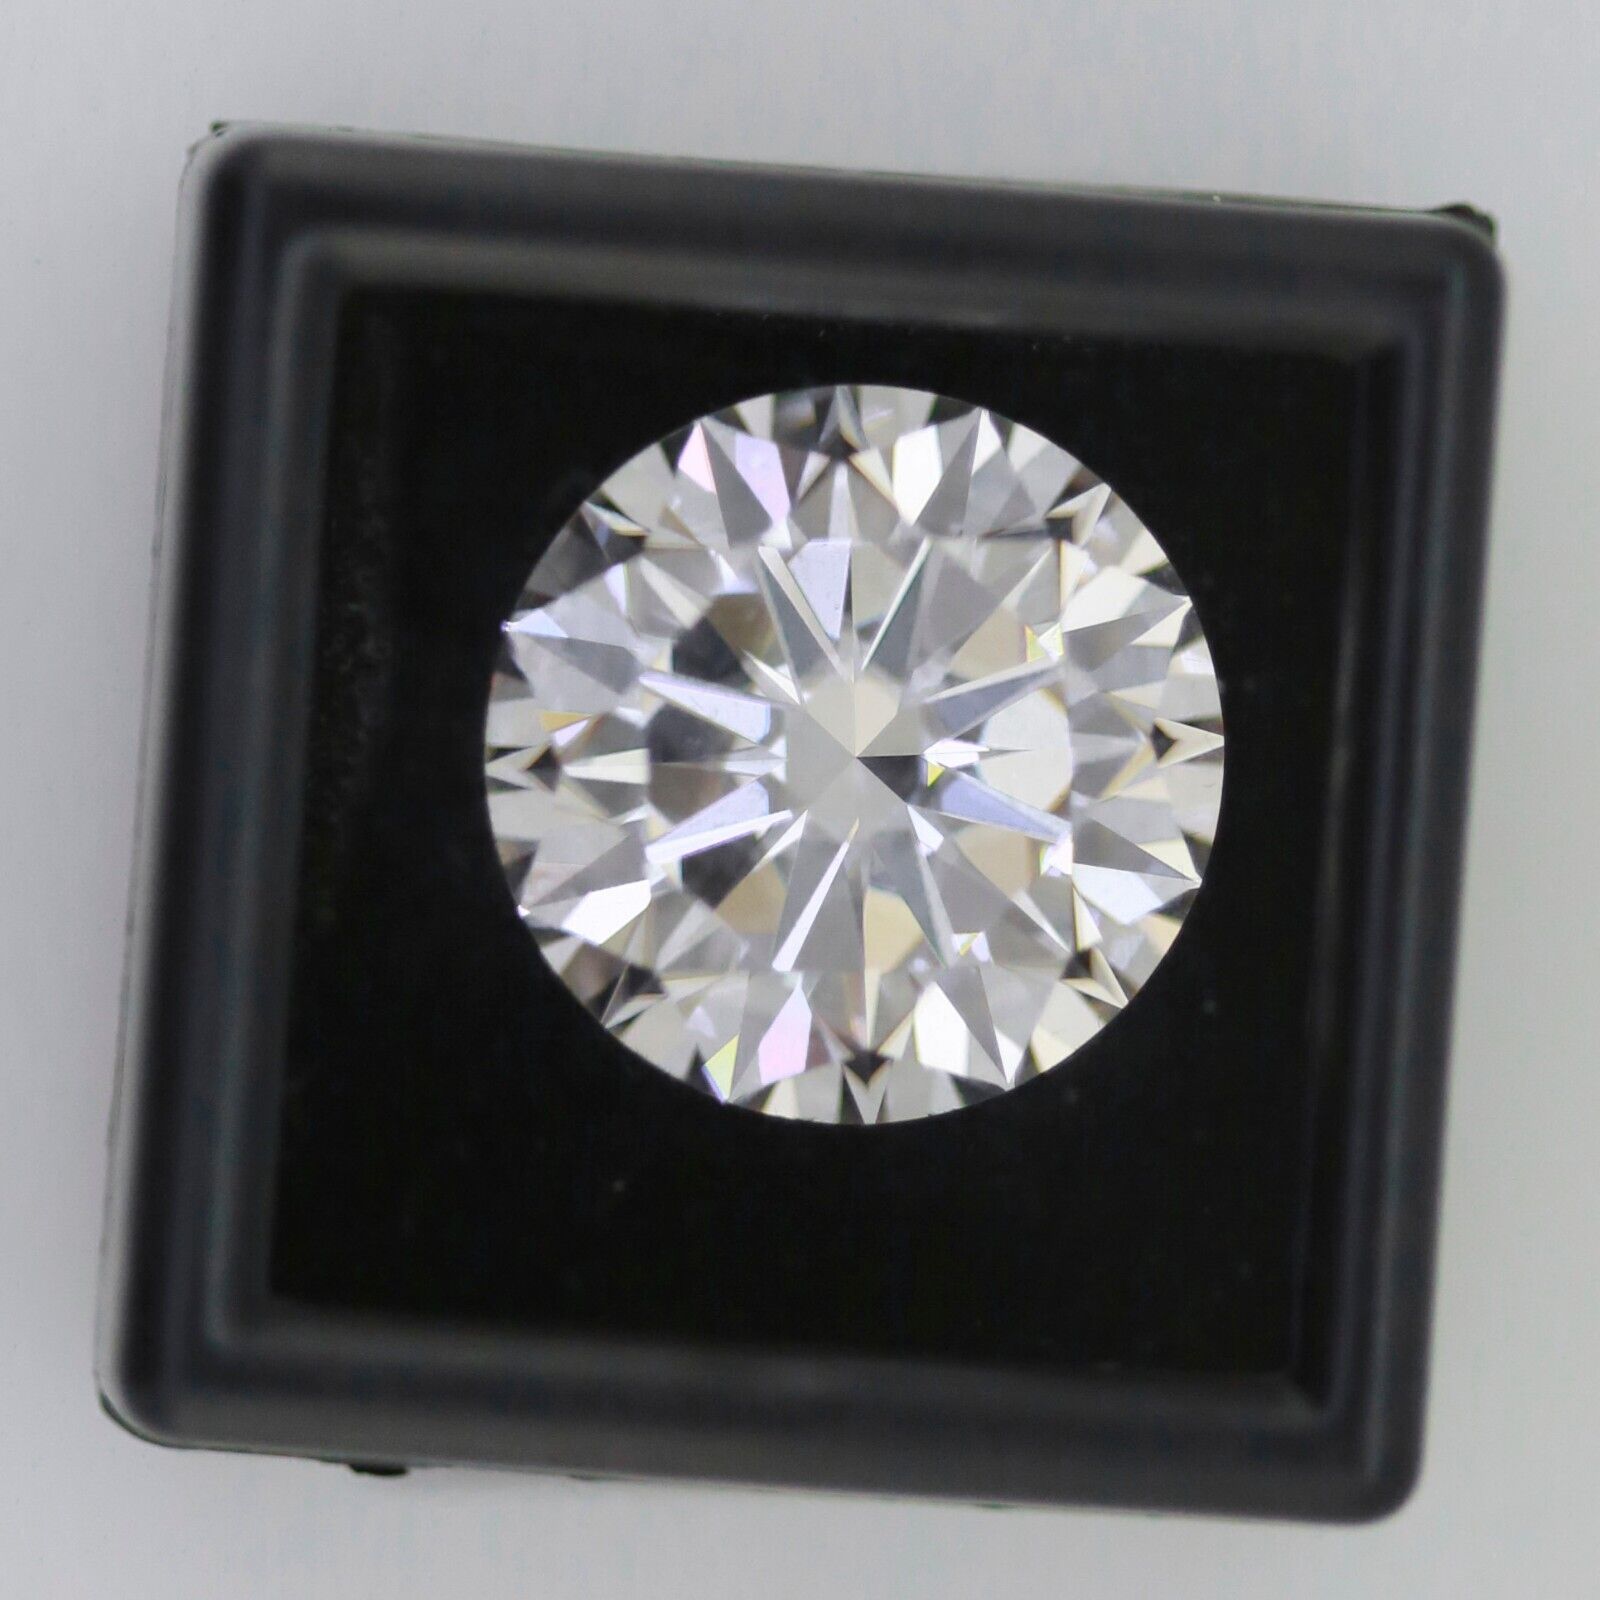 Loose CVD Diamond Round Faceted RD 1 Carat D color VVS1 IGI Certificaiton